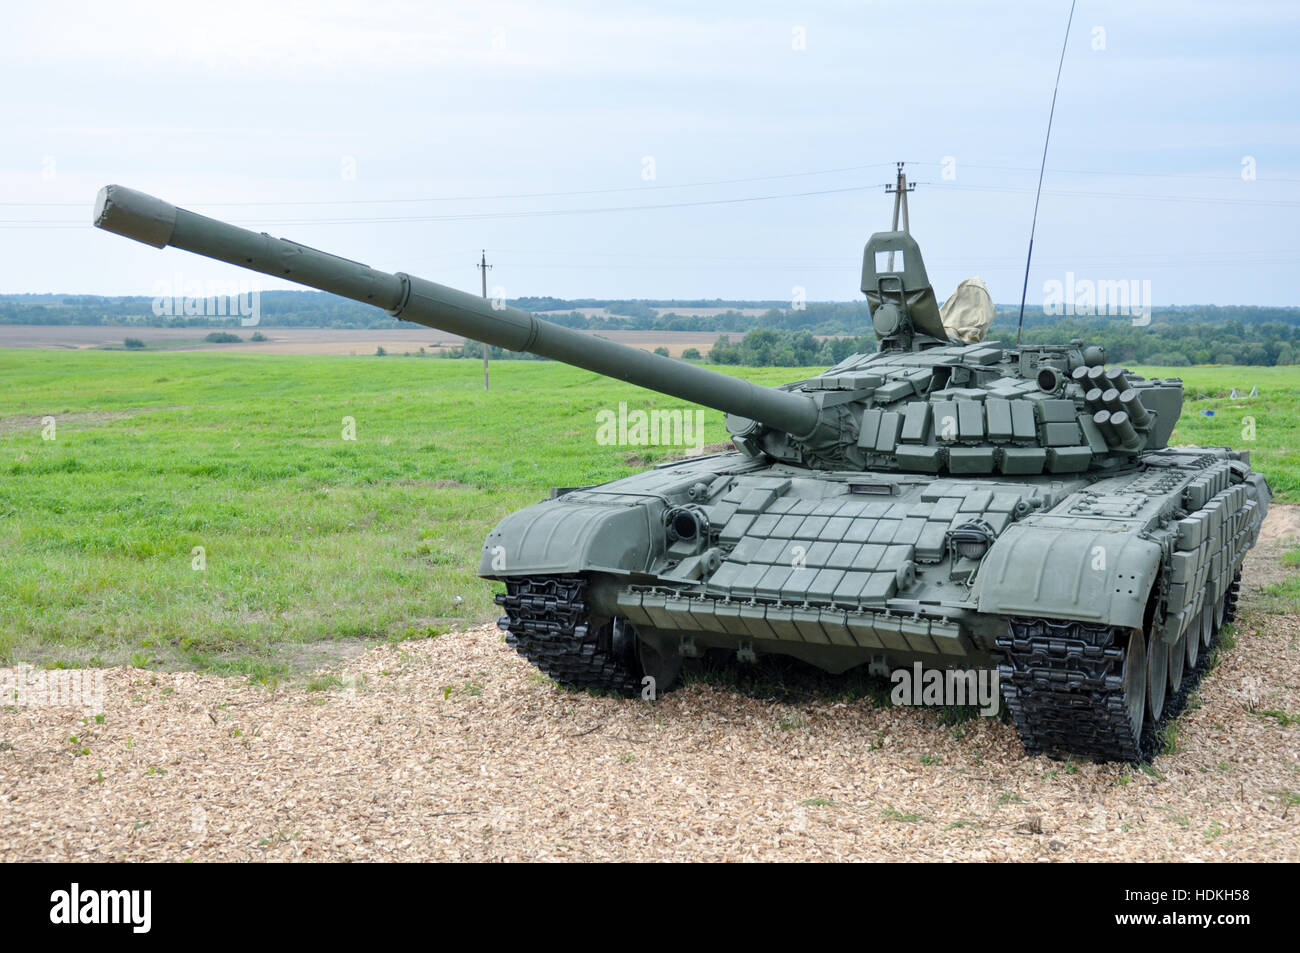 Military equipment. Russian military tank. Stock Photo